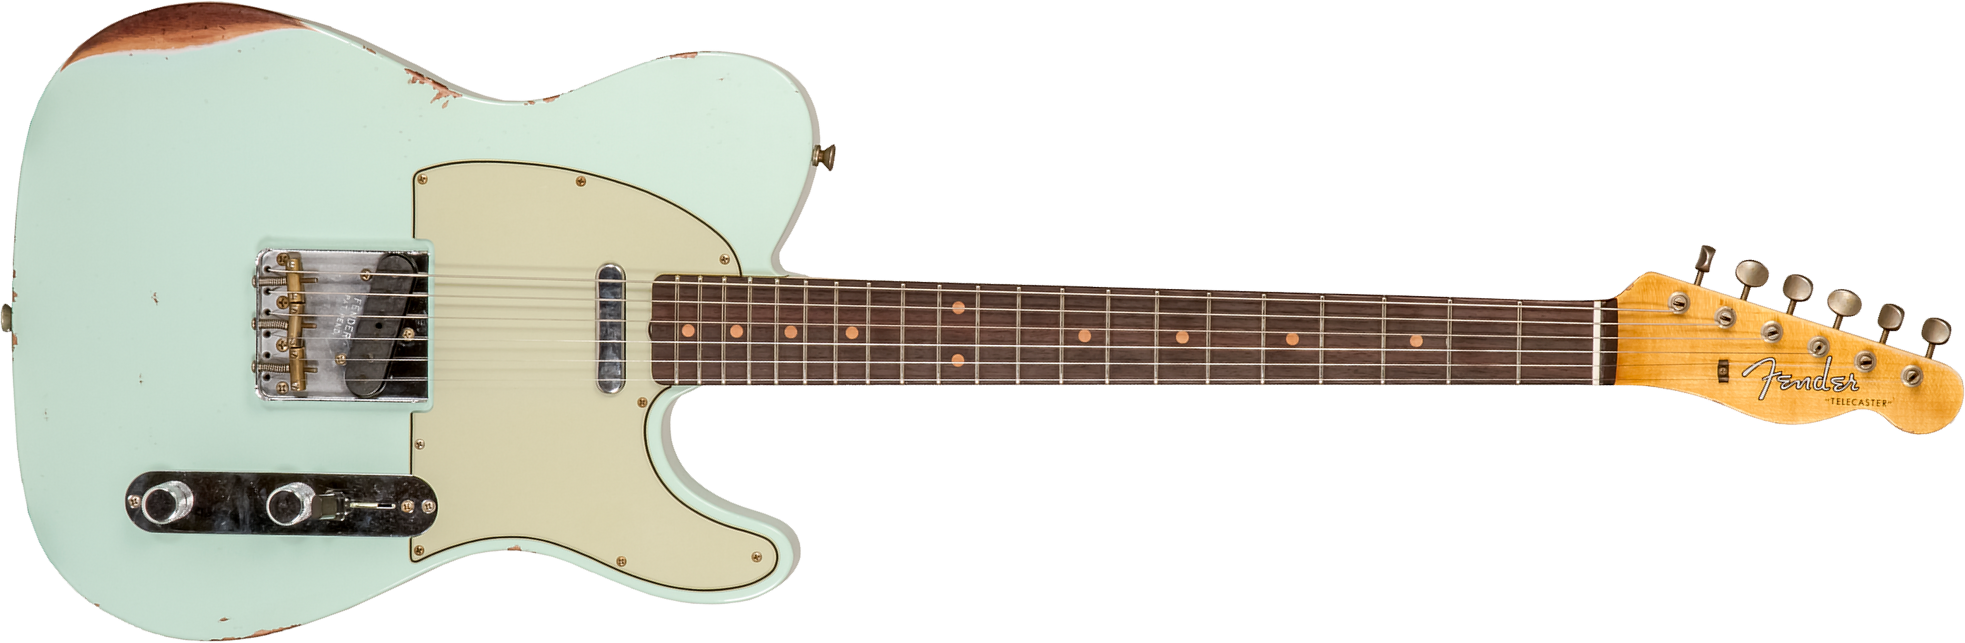 Fender Custom Shop Tele 1961 2s Ht Rw #cz576010 - Relic Aged Surf Green - Tel shape electric guitar - Main picture